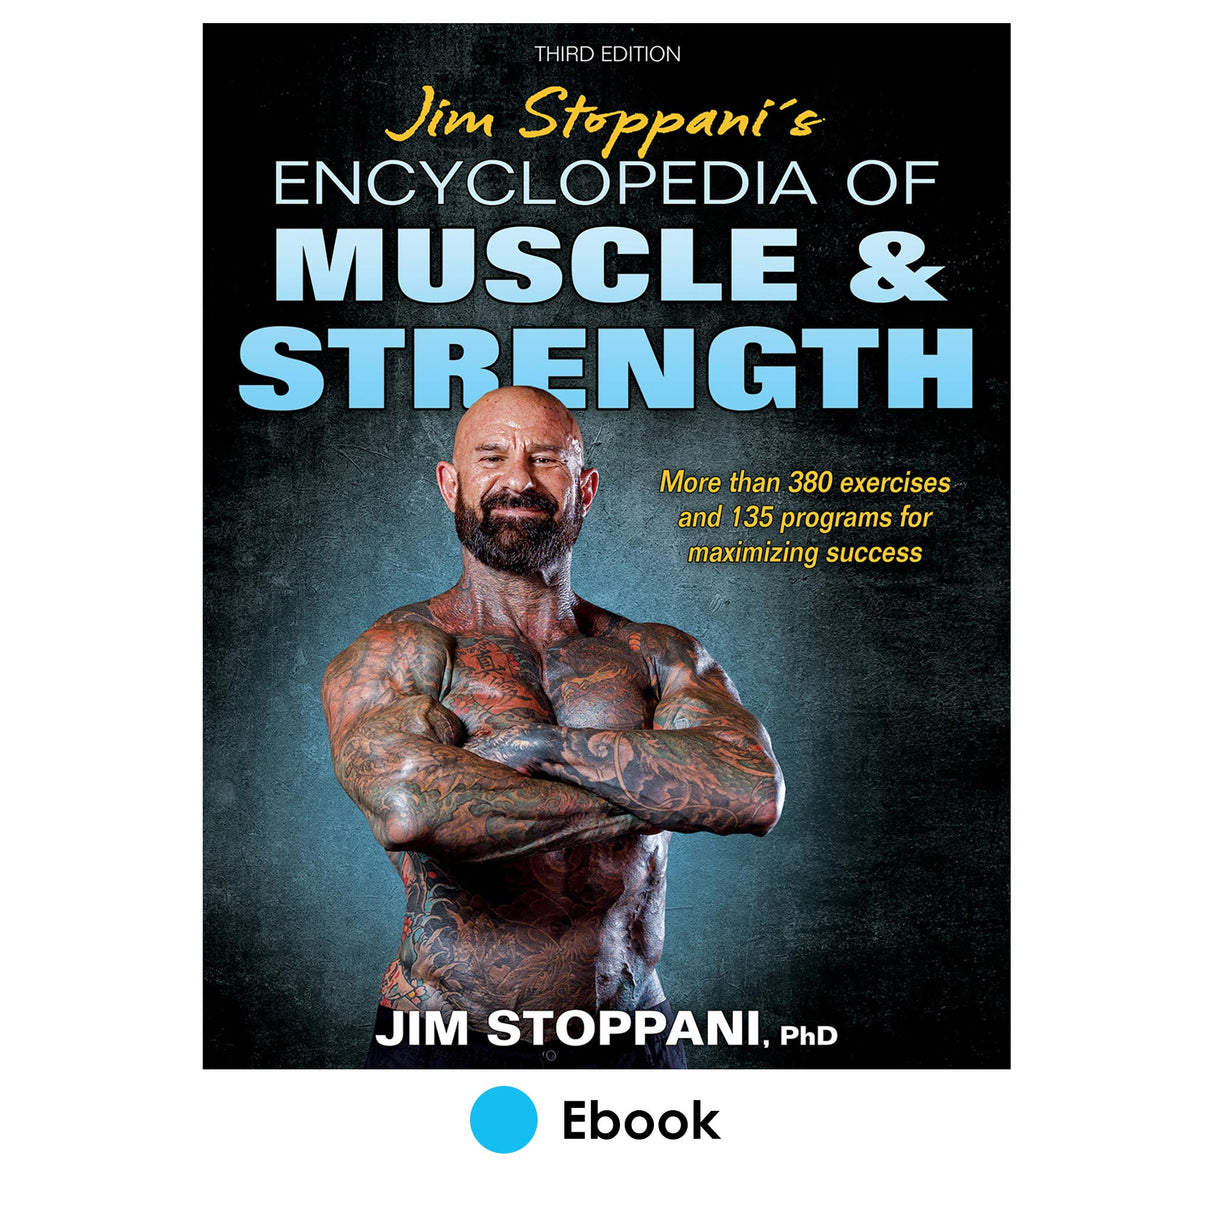 Jim Stoppani's Encyclopedia of Muscle & Strength 3rd Edition epub